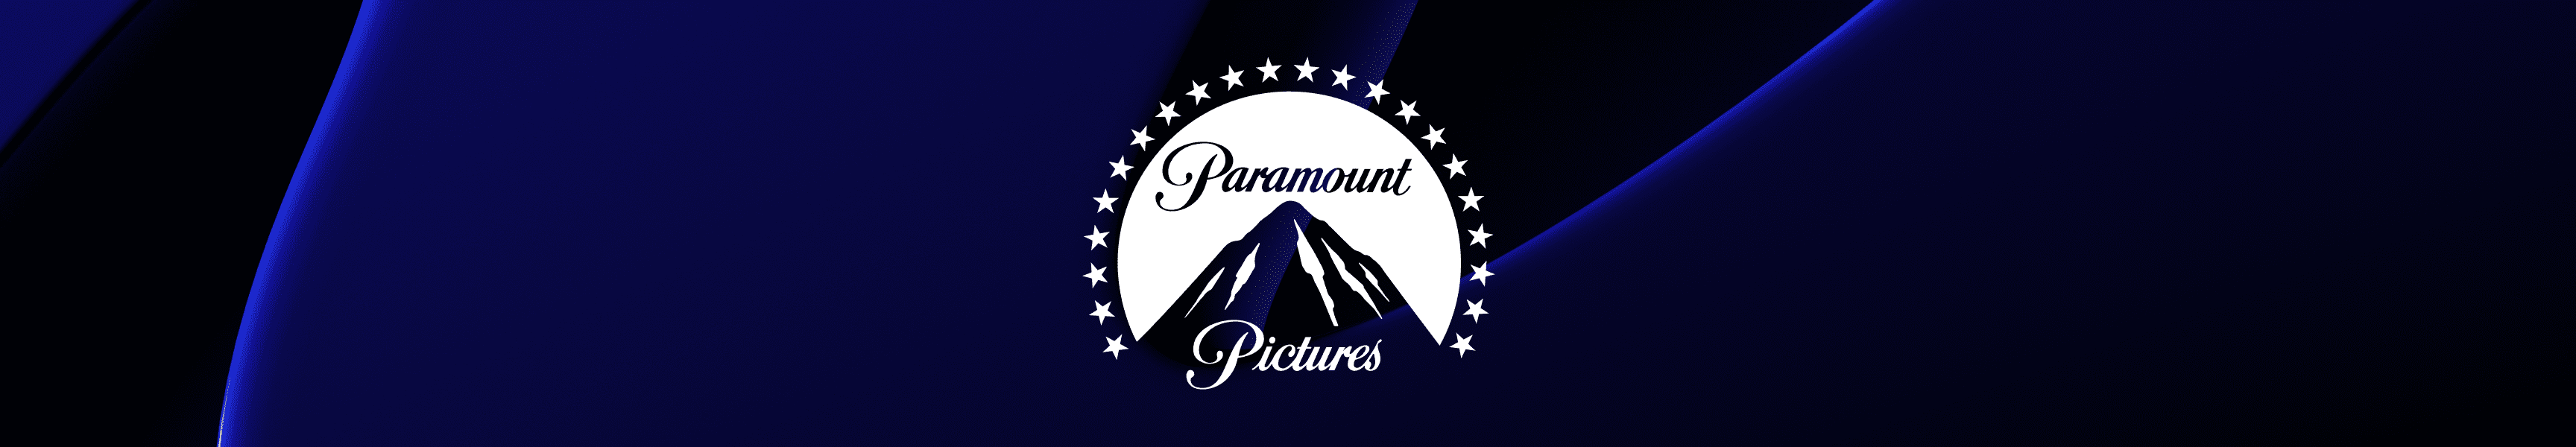 Paramount Pictures Joggers & Sweatpants